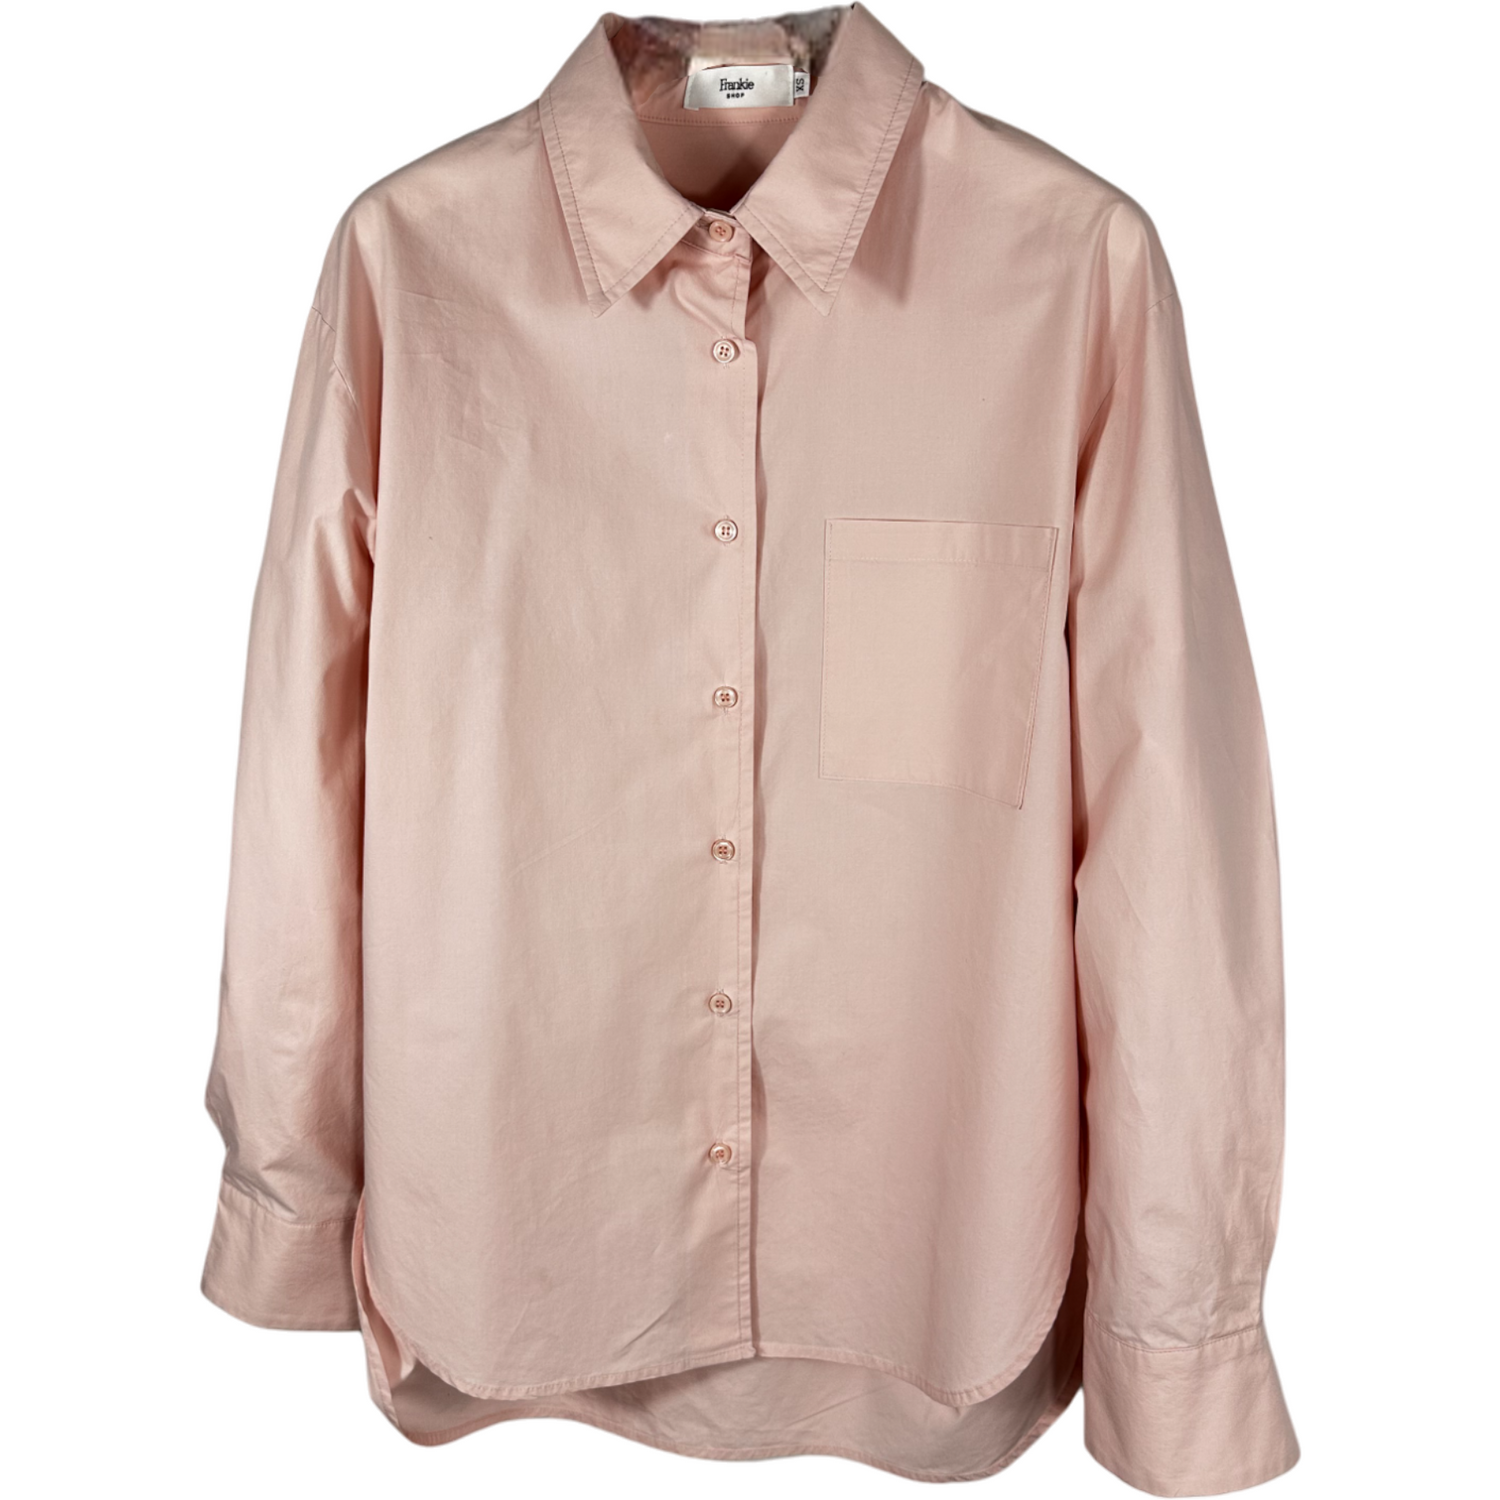 THE FRANKIE SHOP Pink Long Sleeve Shirt